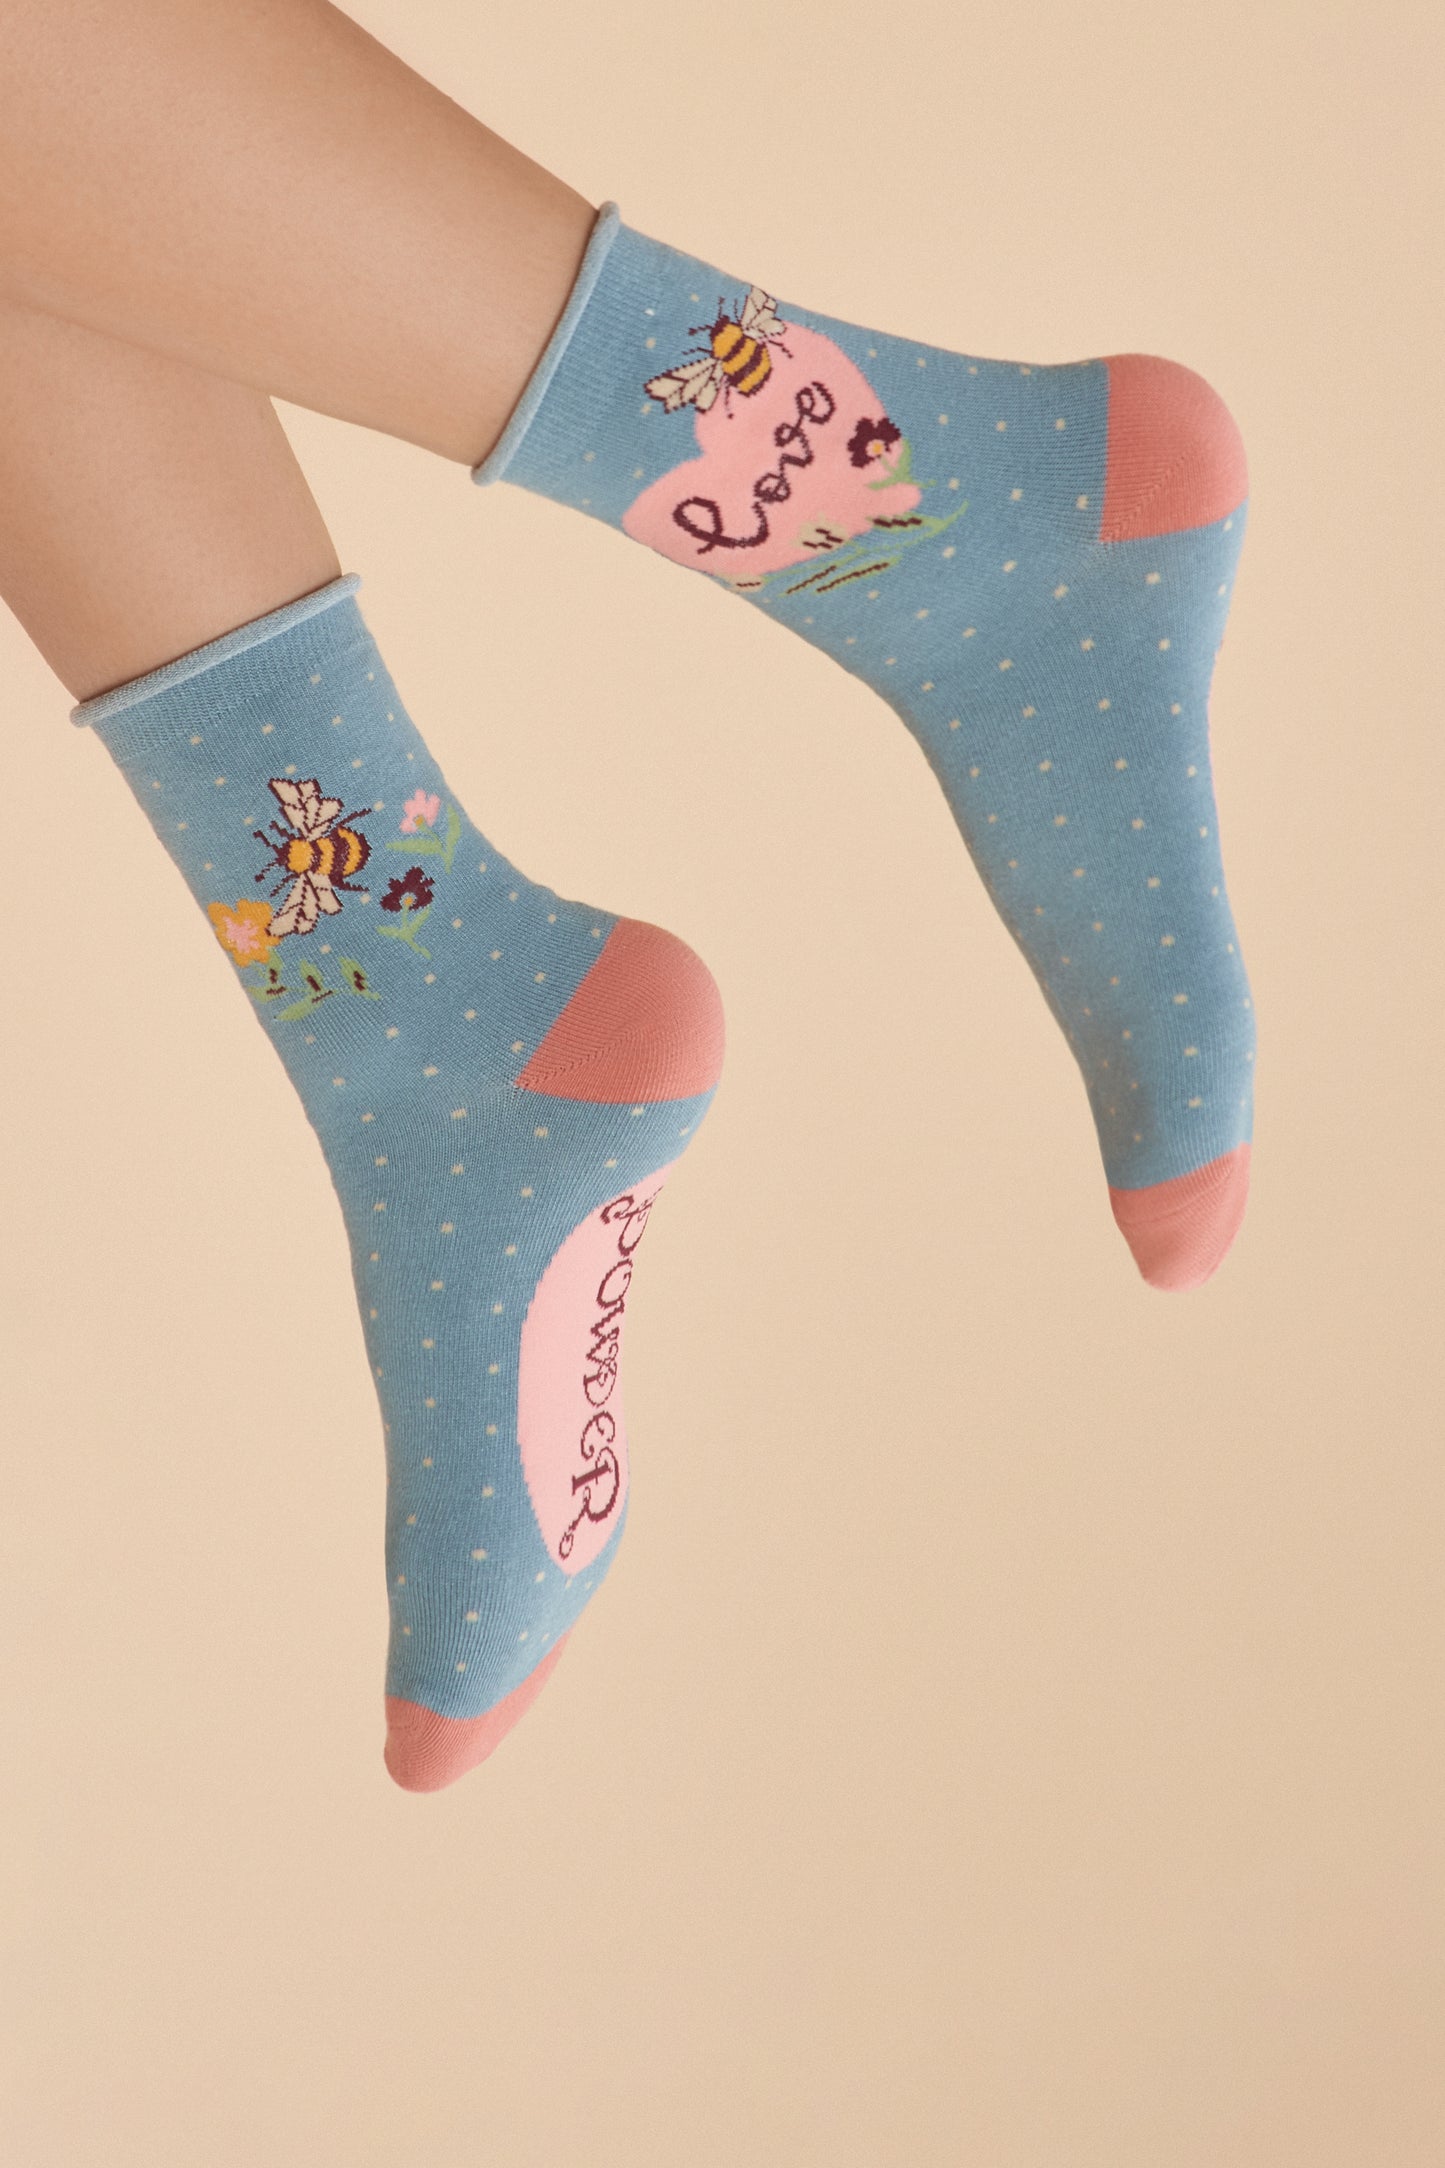 Powder Design Ltd - Accessories  Socks Love Bumblebee (2039)